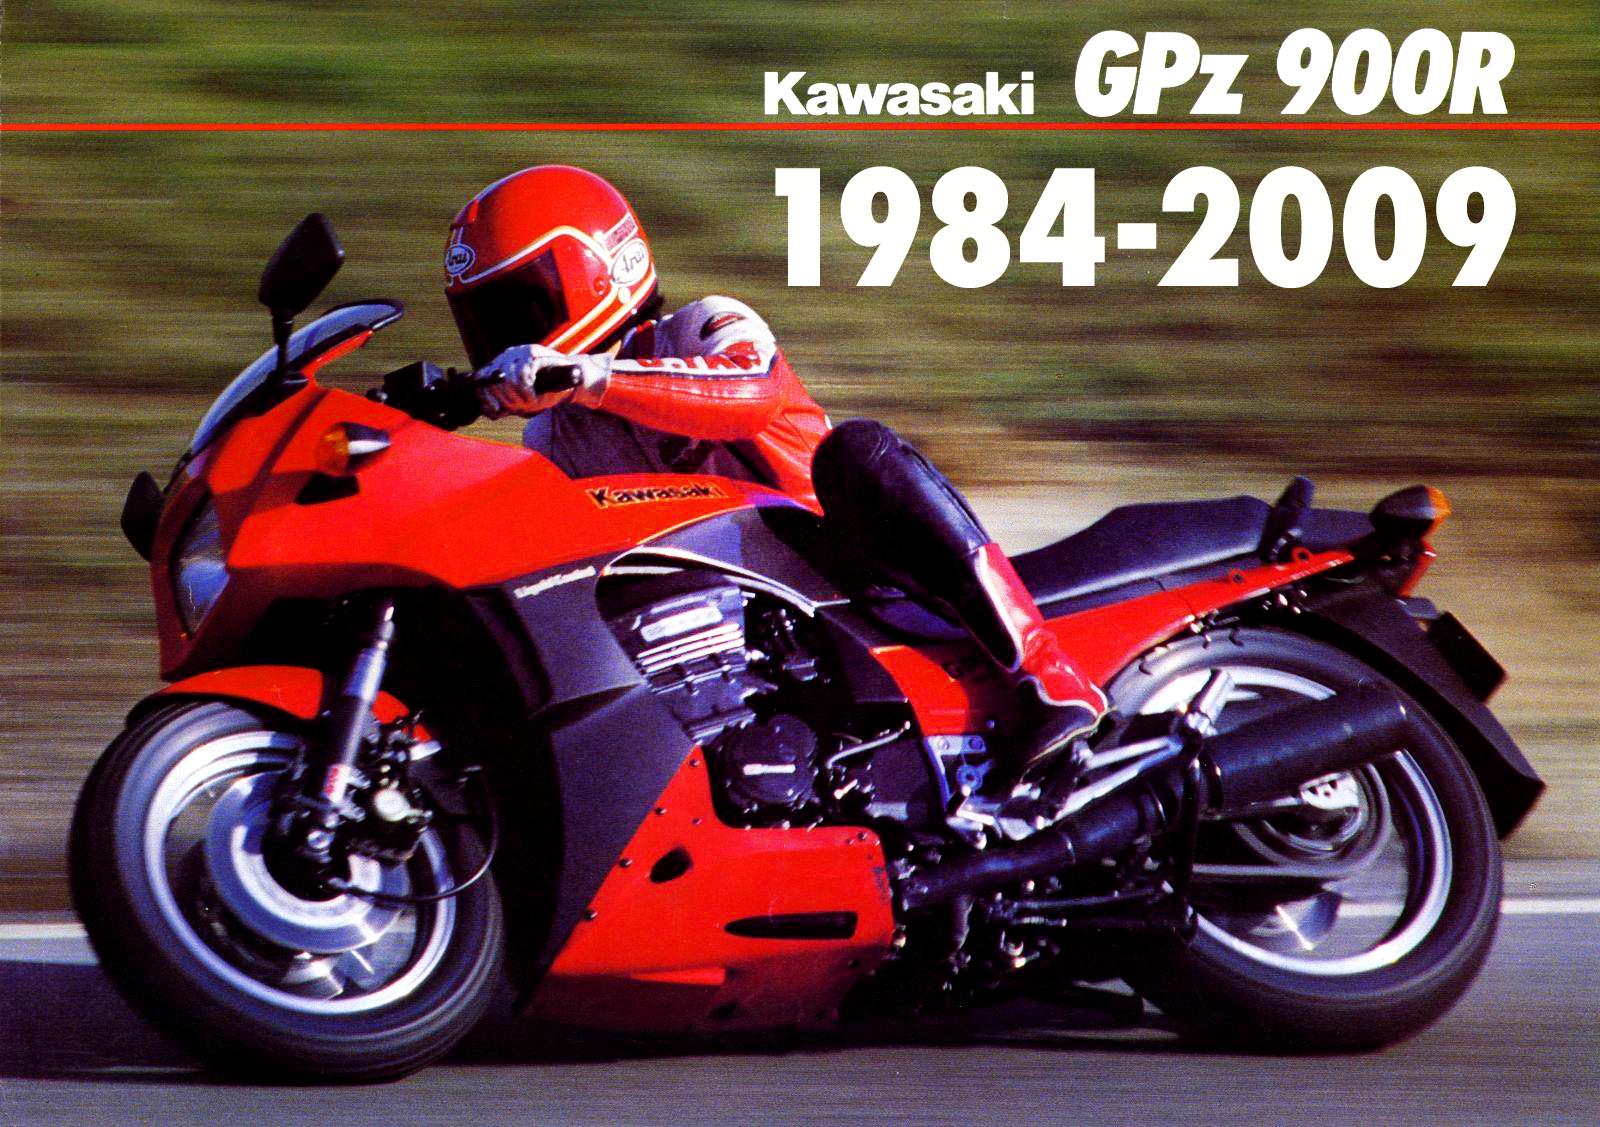 Kawasaki gpz900r (zx900a, ninja 900): review, history, specs - cyclechaos